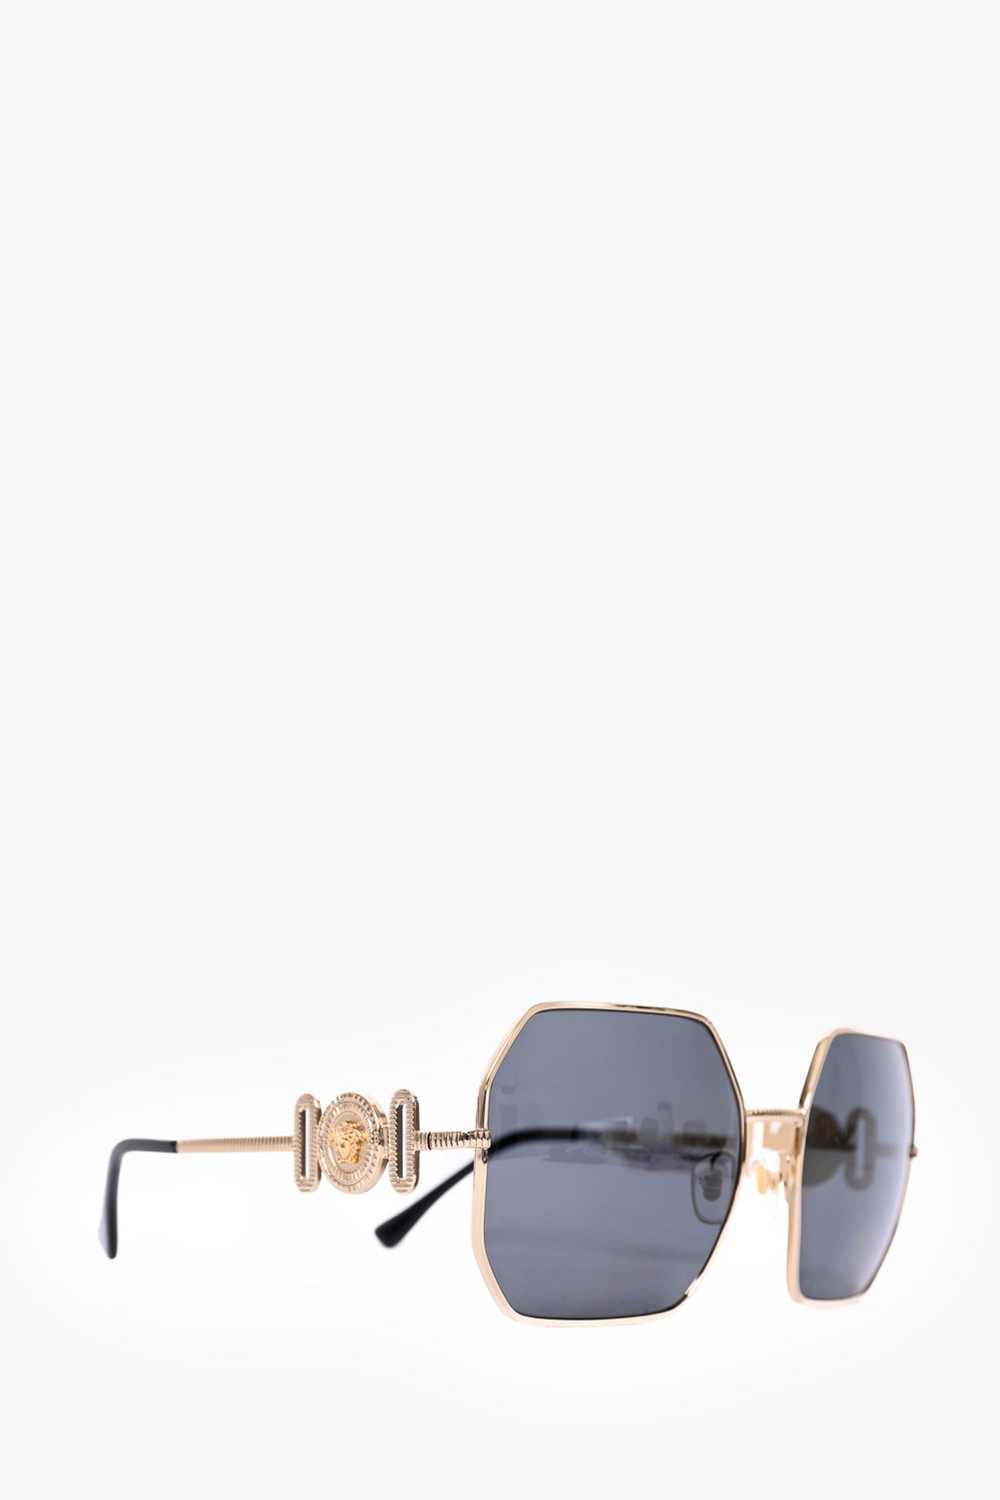 Versace Gold Medusa Tinted Sunglasses - image 2